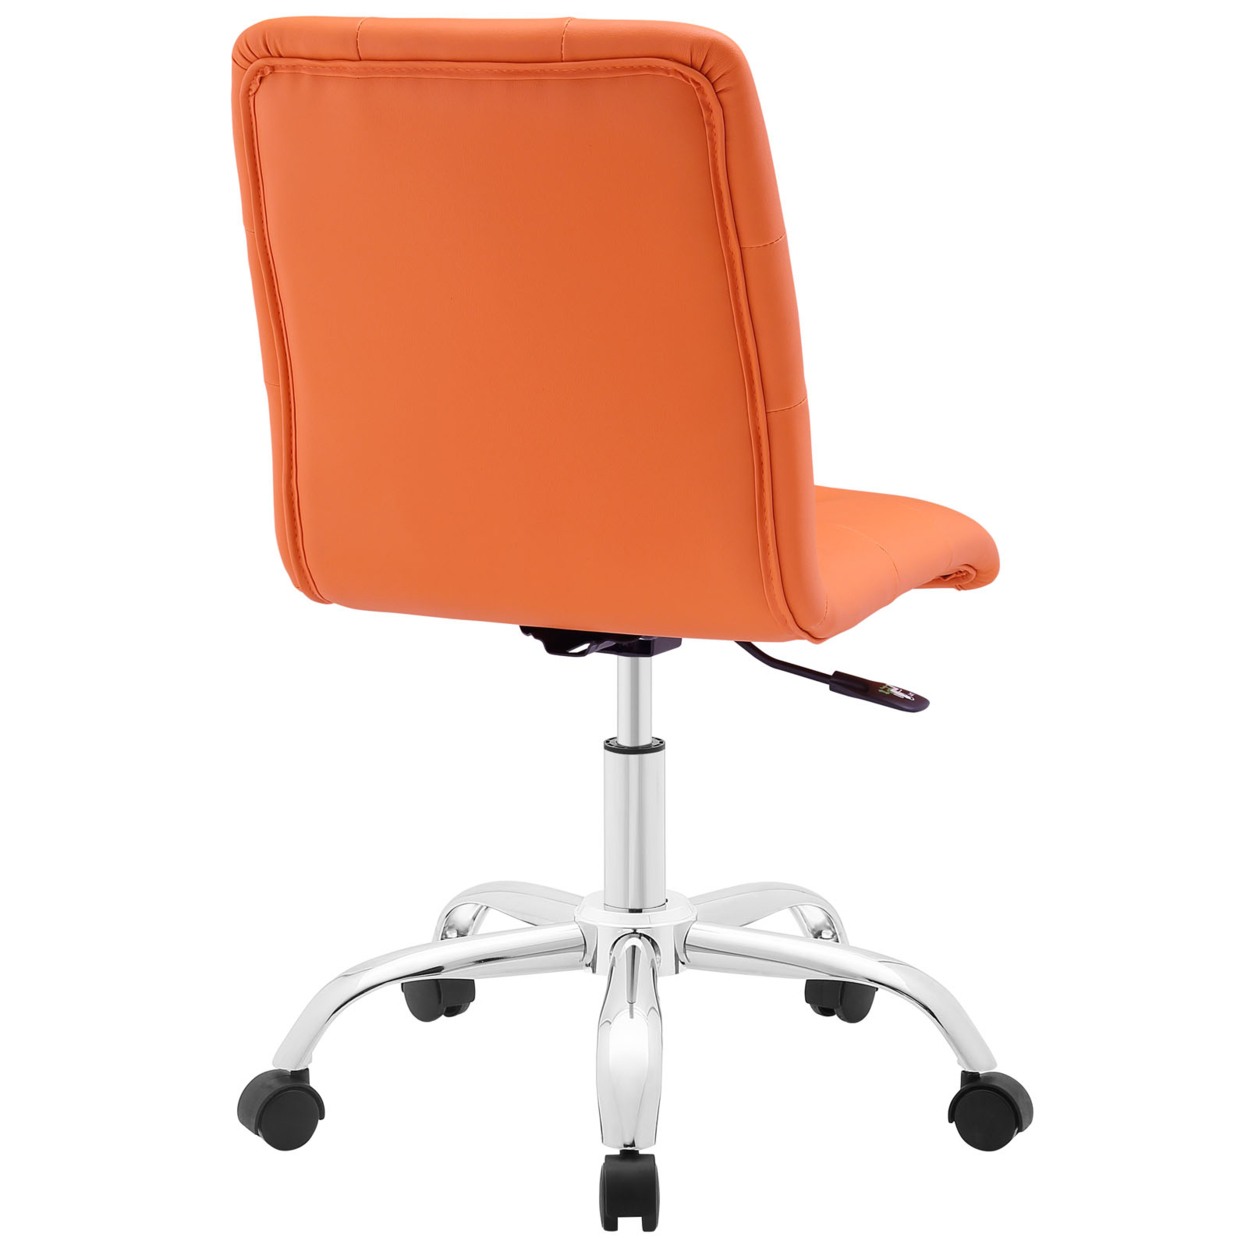 Orange Prim Armless Mid Back Office Chair